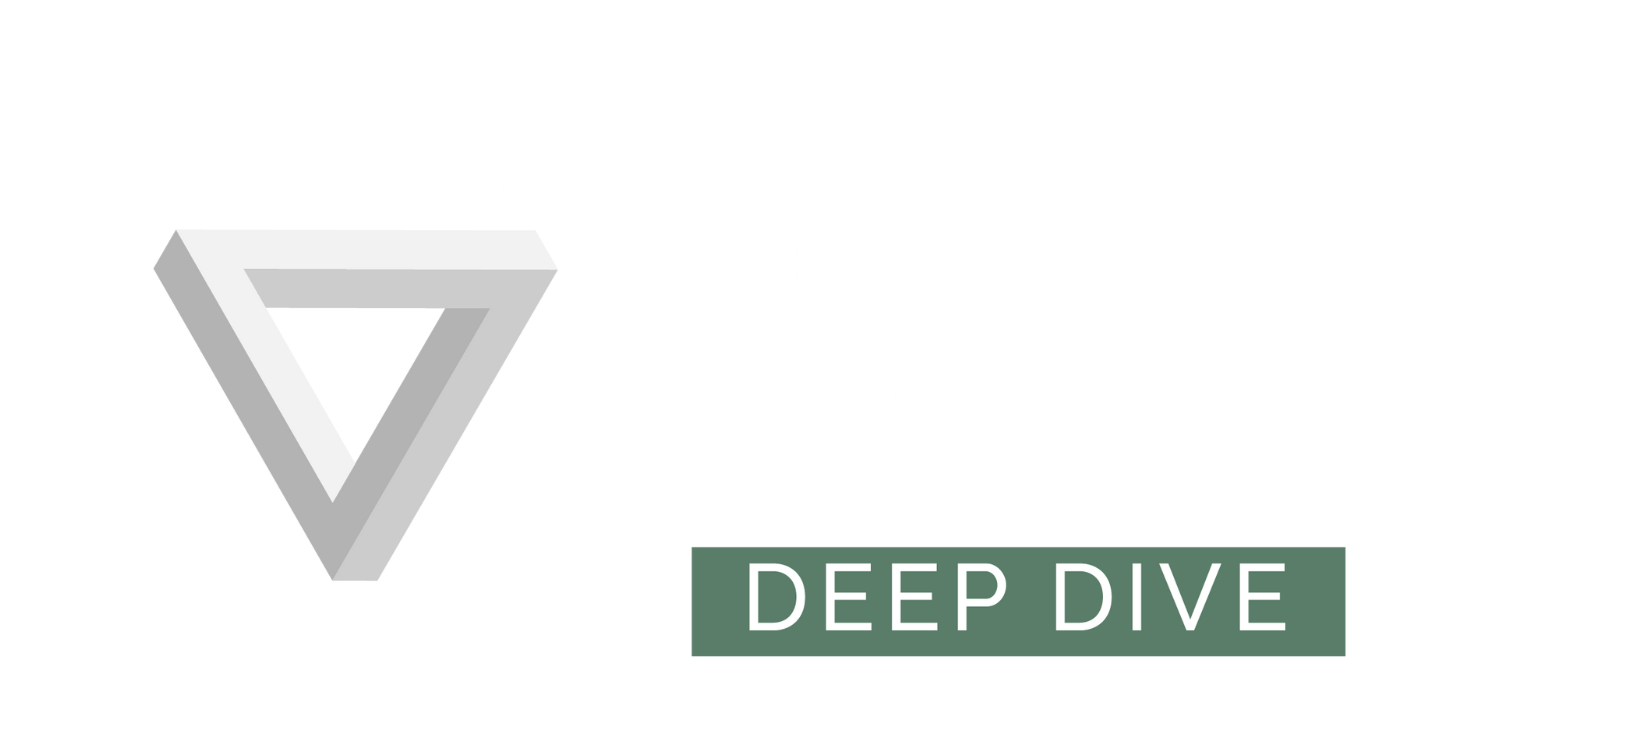 DeepDiveVoice